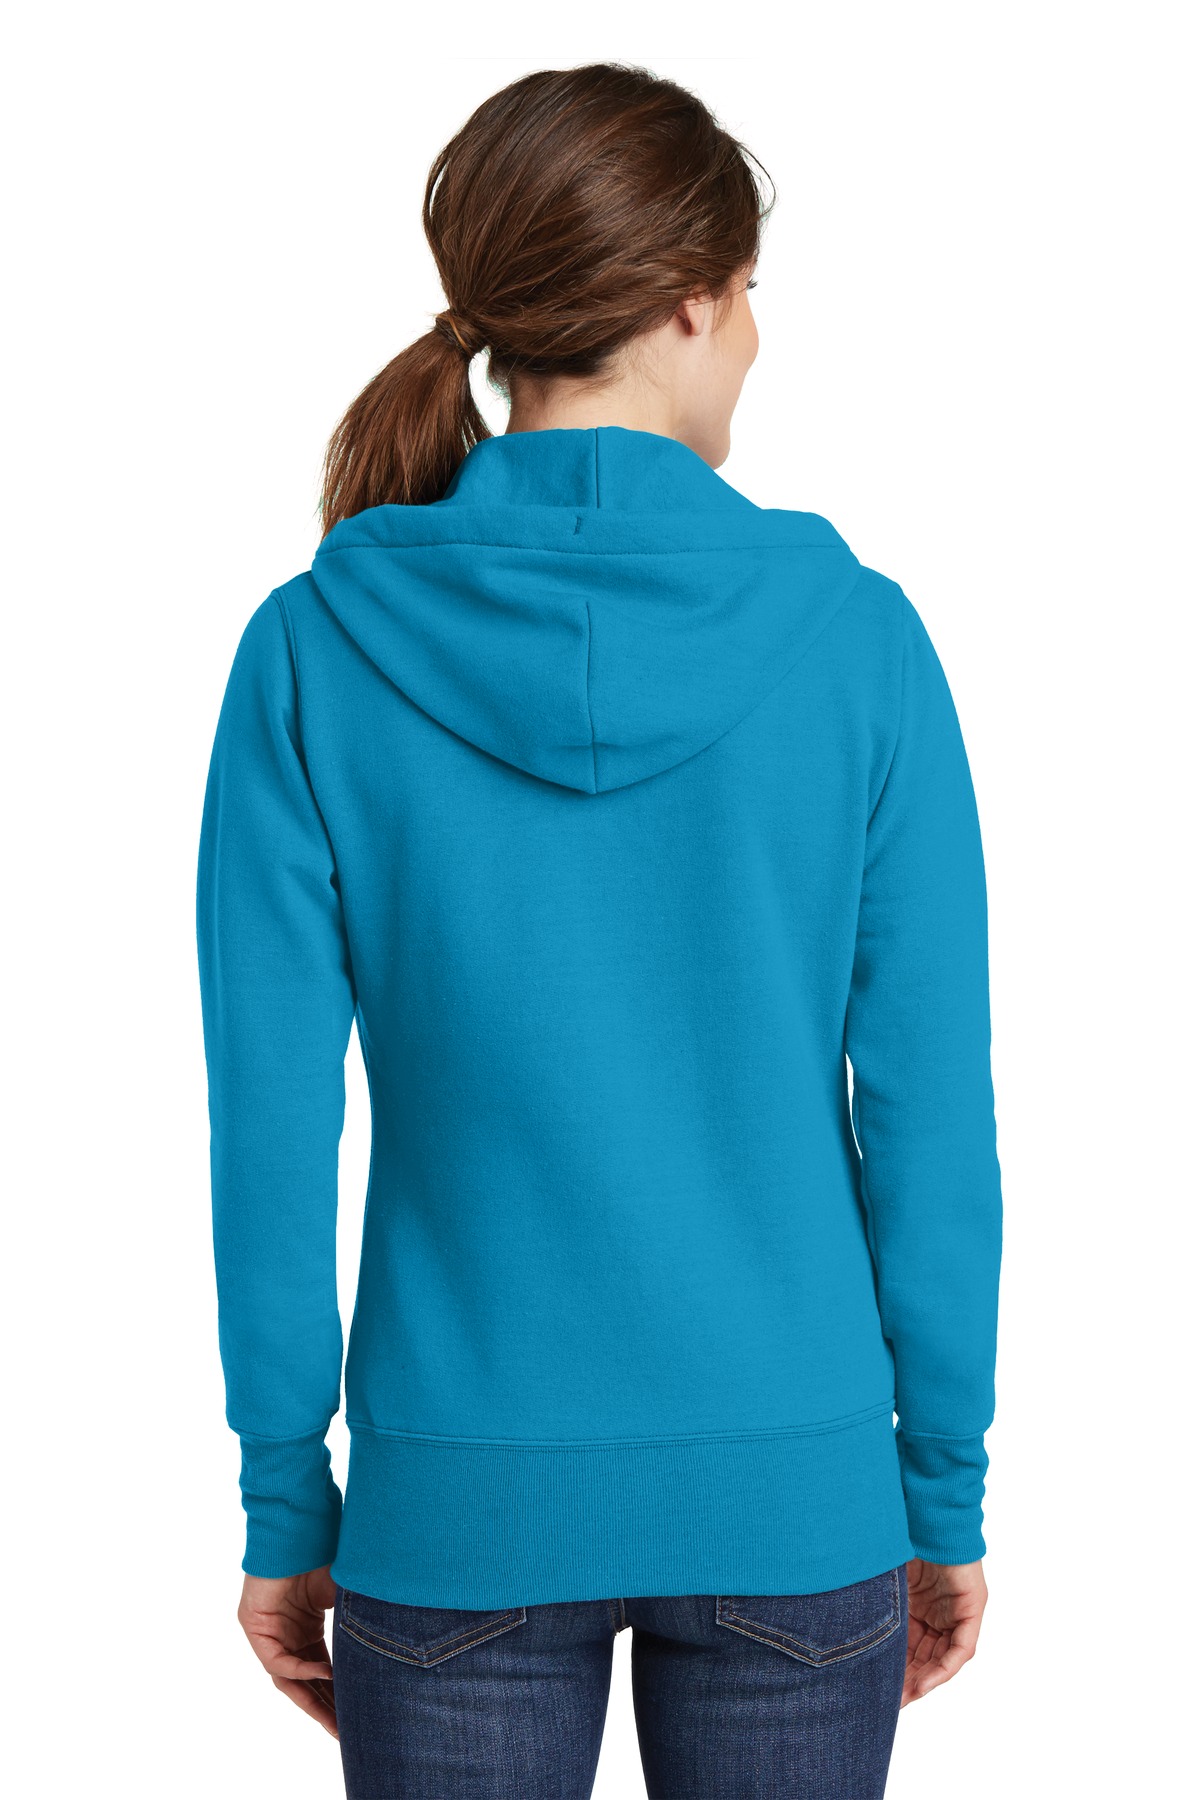 Port & Company Ladies Core Fleece Full Zip Hooded Sweatshirt-2XL (Neon Blue) - image 2 of 6